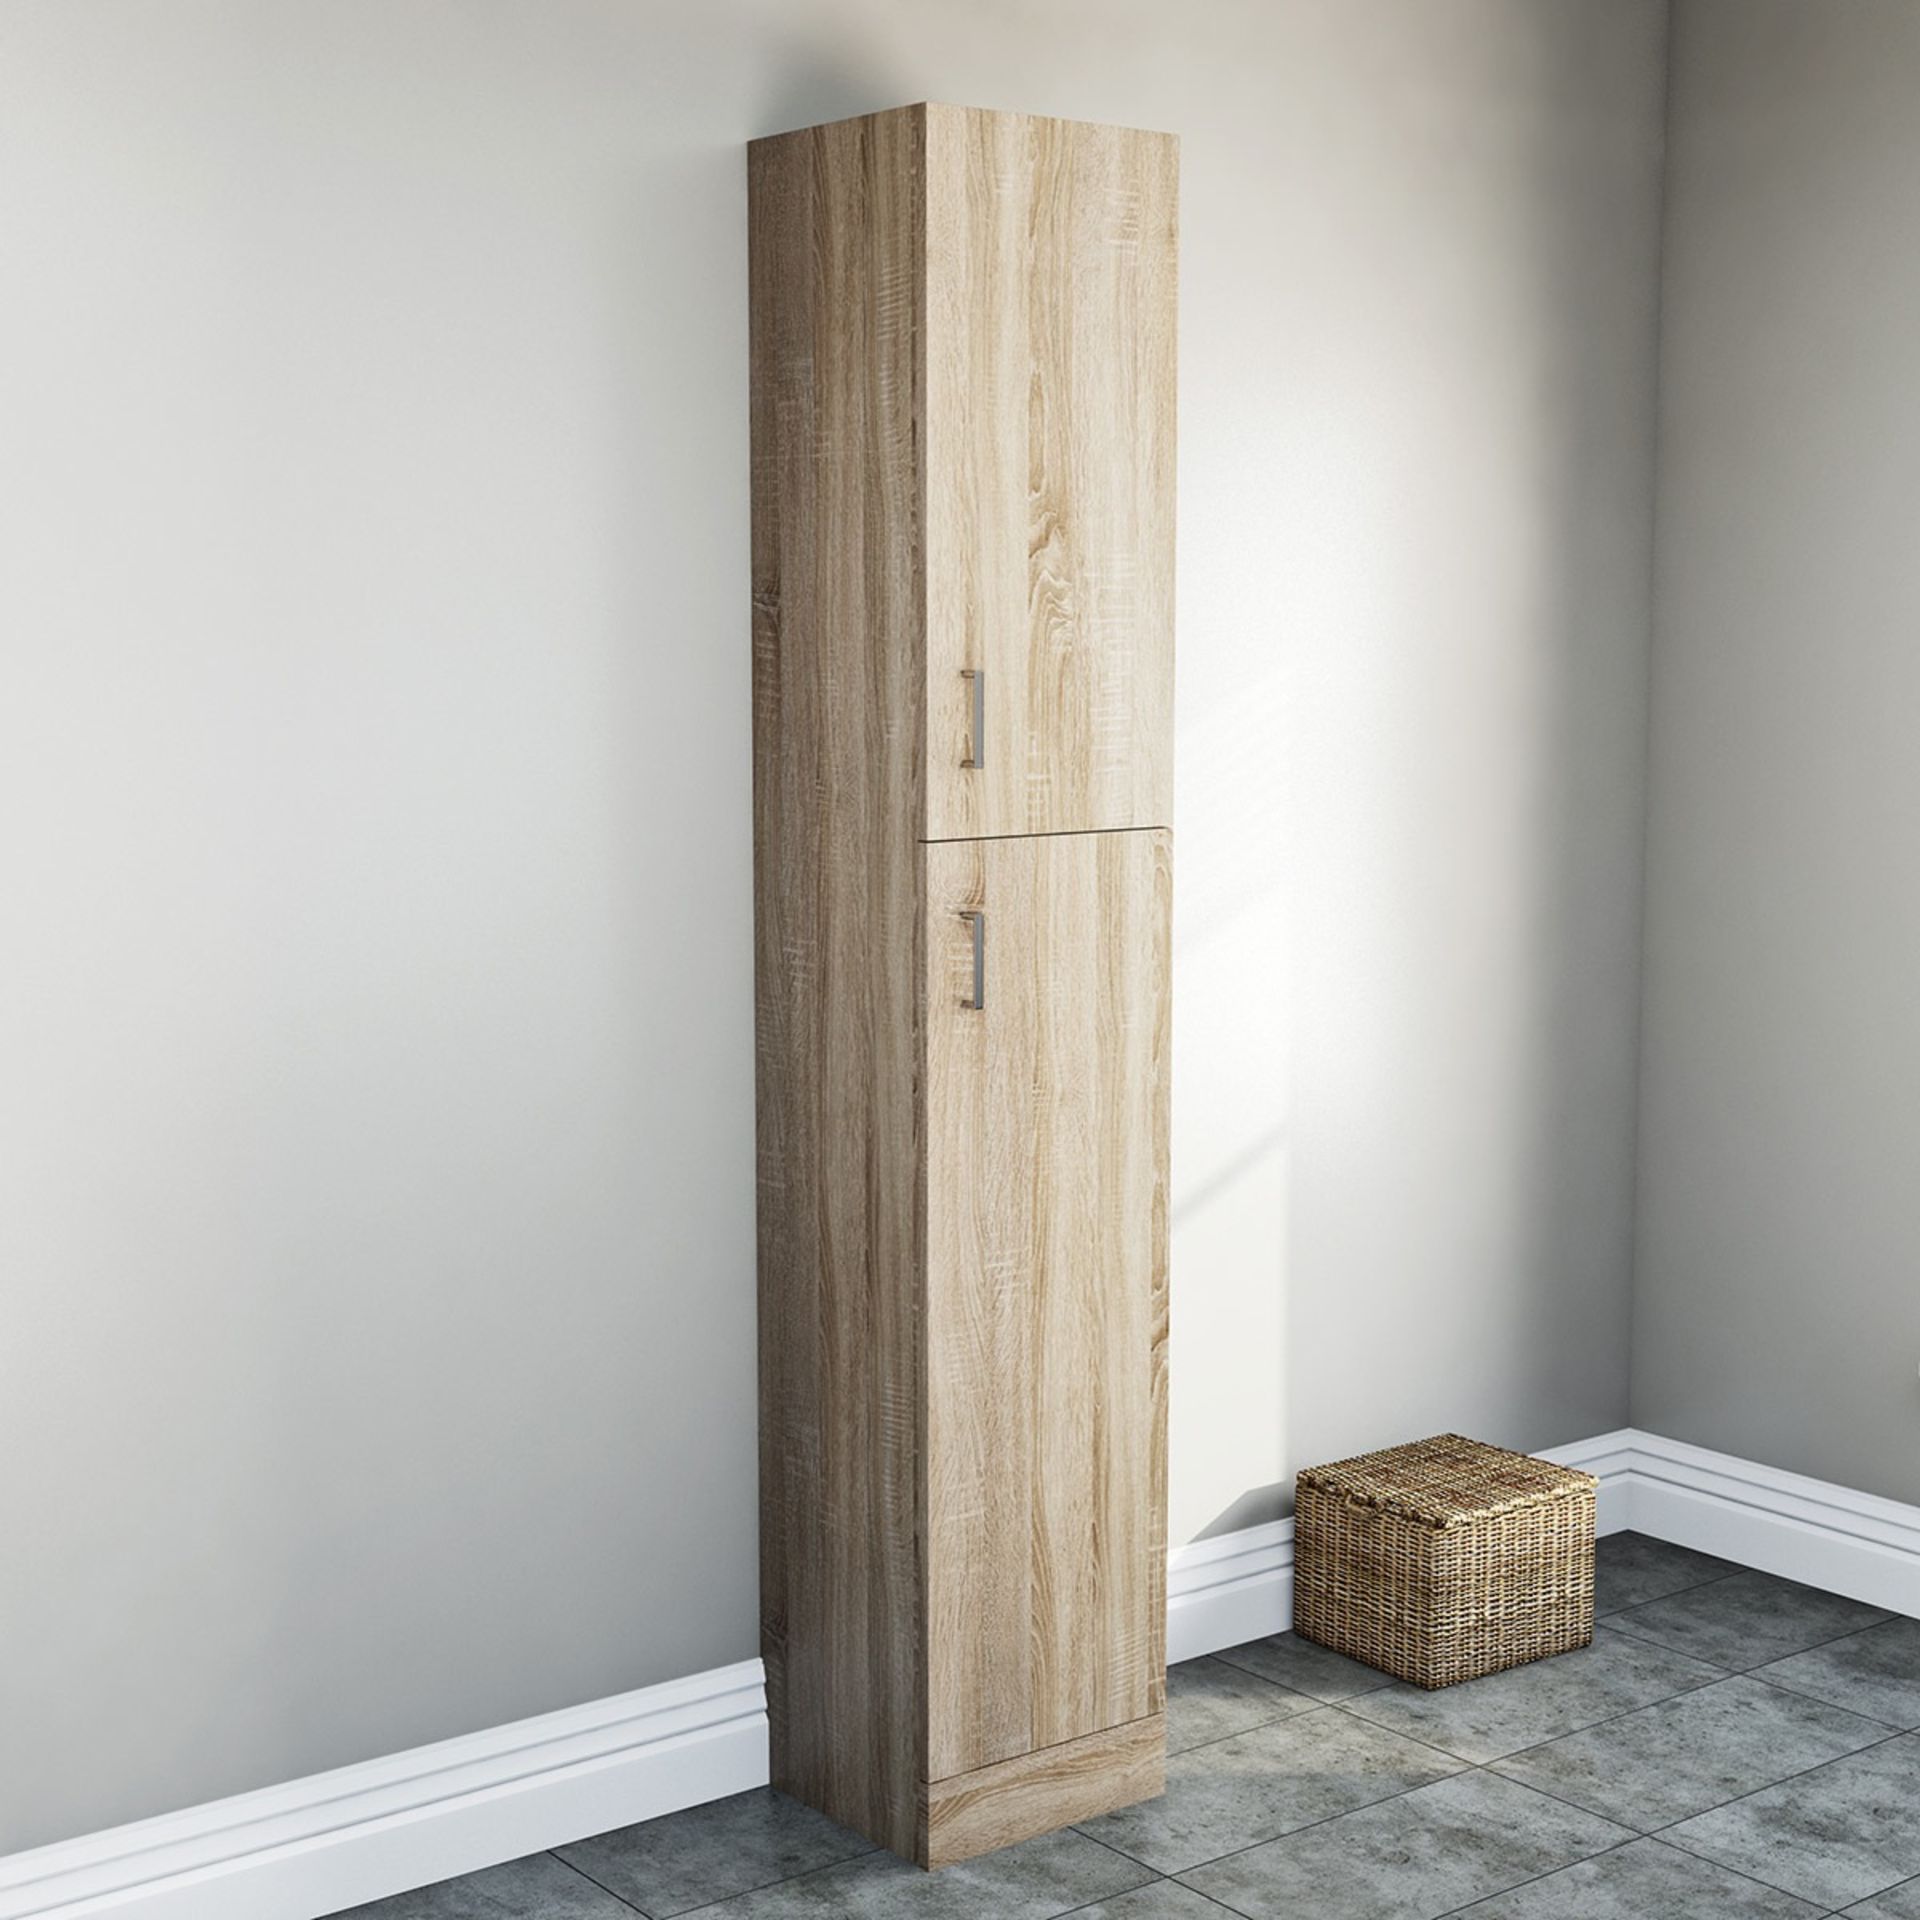 1 x Sienna Oak 300mm Tall Bathroom Storage Unit - Unused Stock - CL190 - Ref BR063 - Location: Bolto - Image 5 of 5